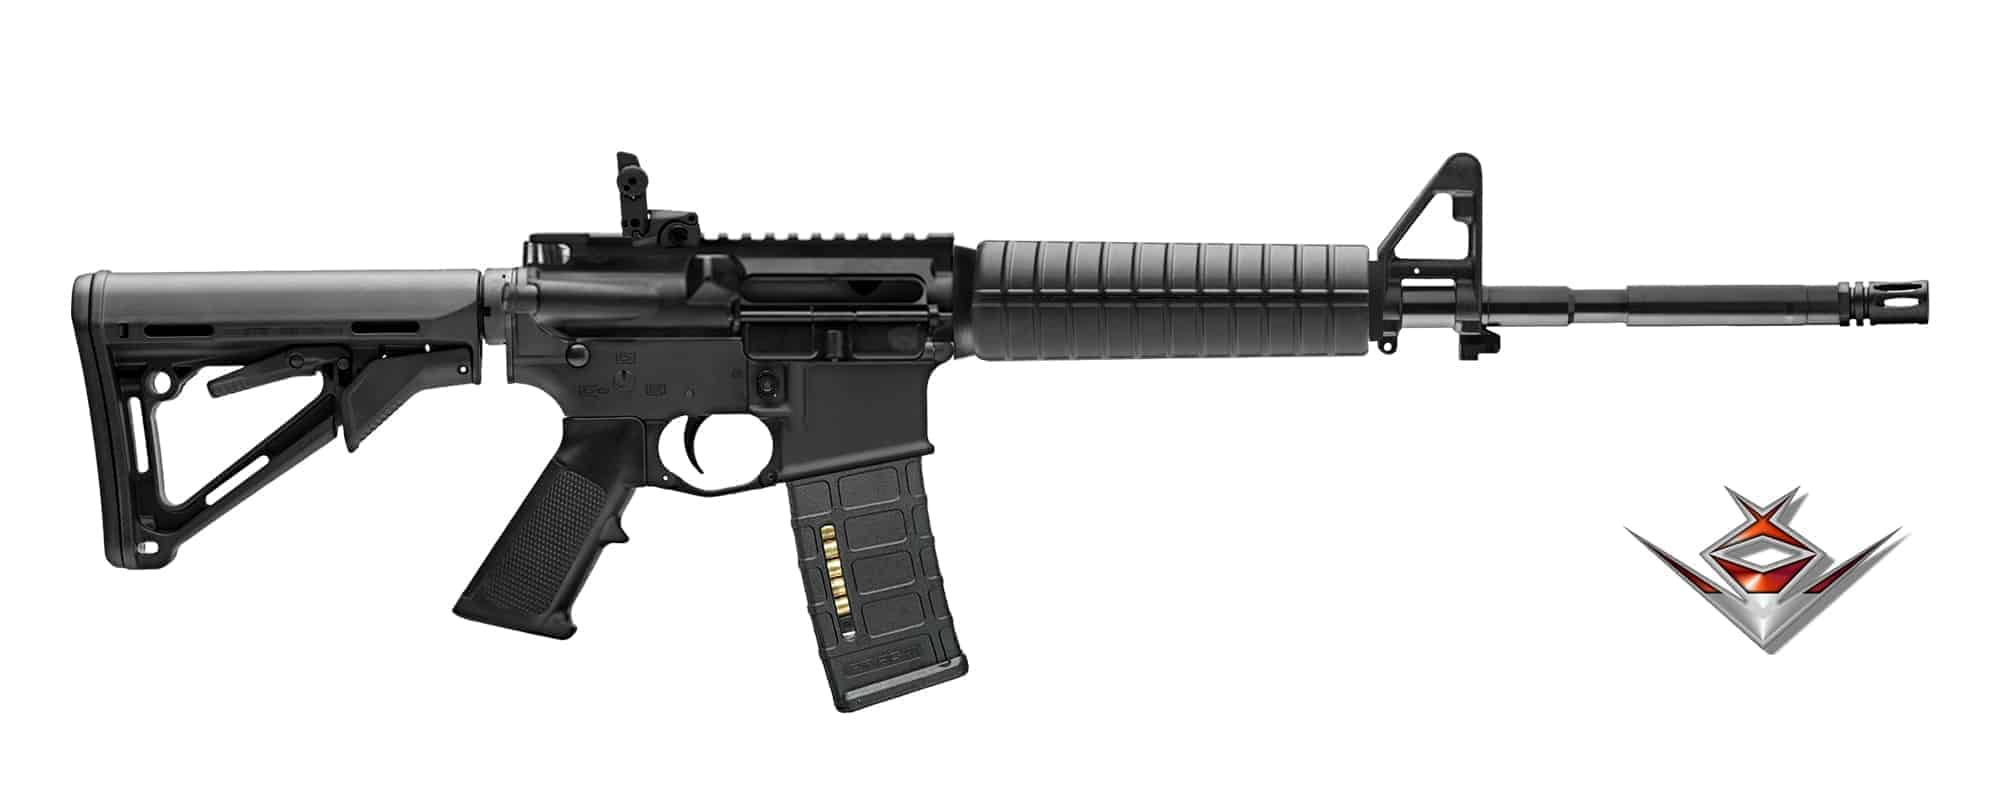 16" Carbine Rifle With M4 Handguards